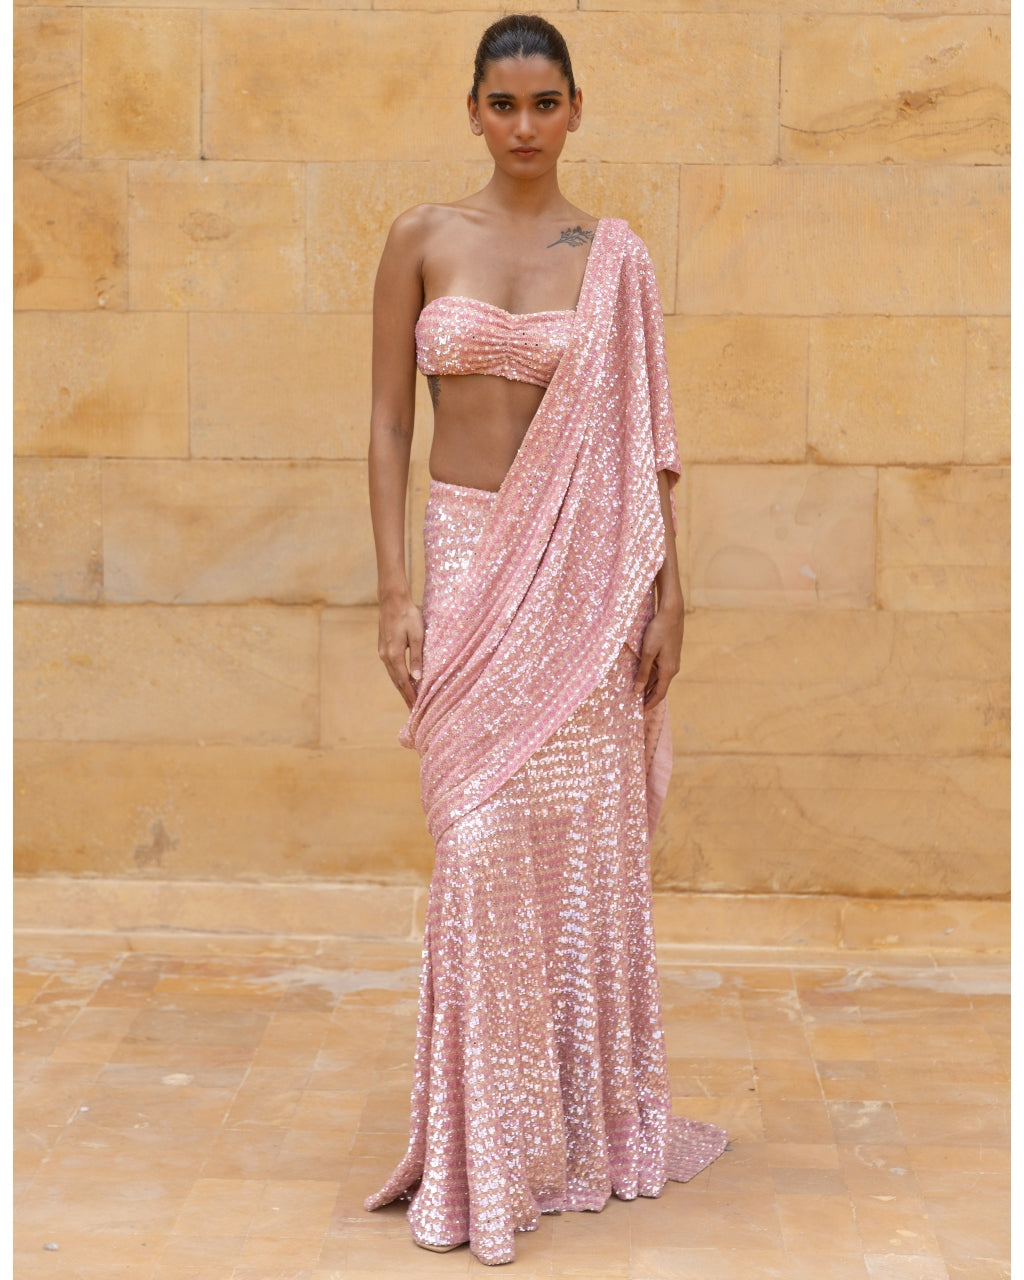 Marvelous Light Pink Sequins Work Silk Wedding Saree With Blouse